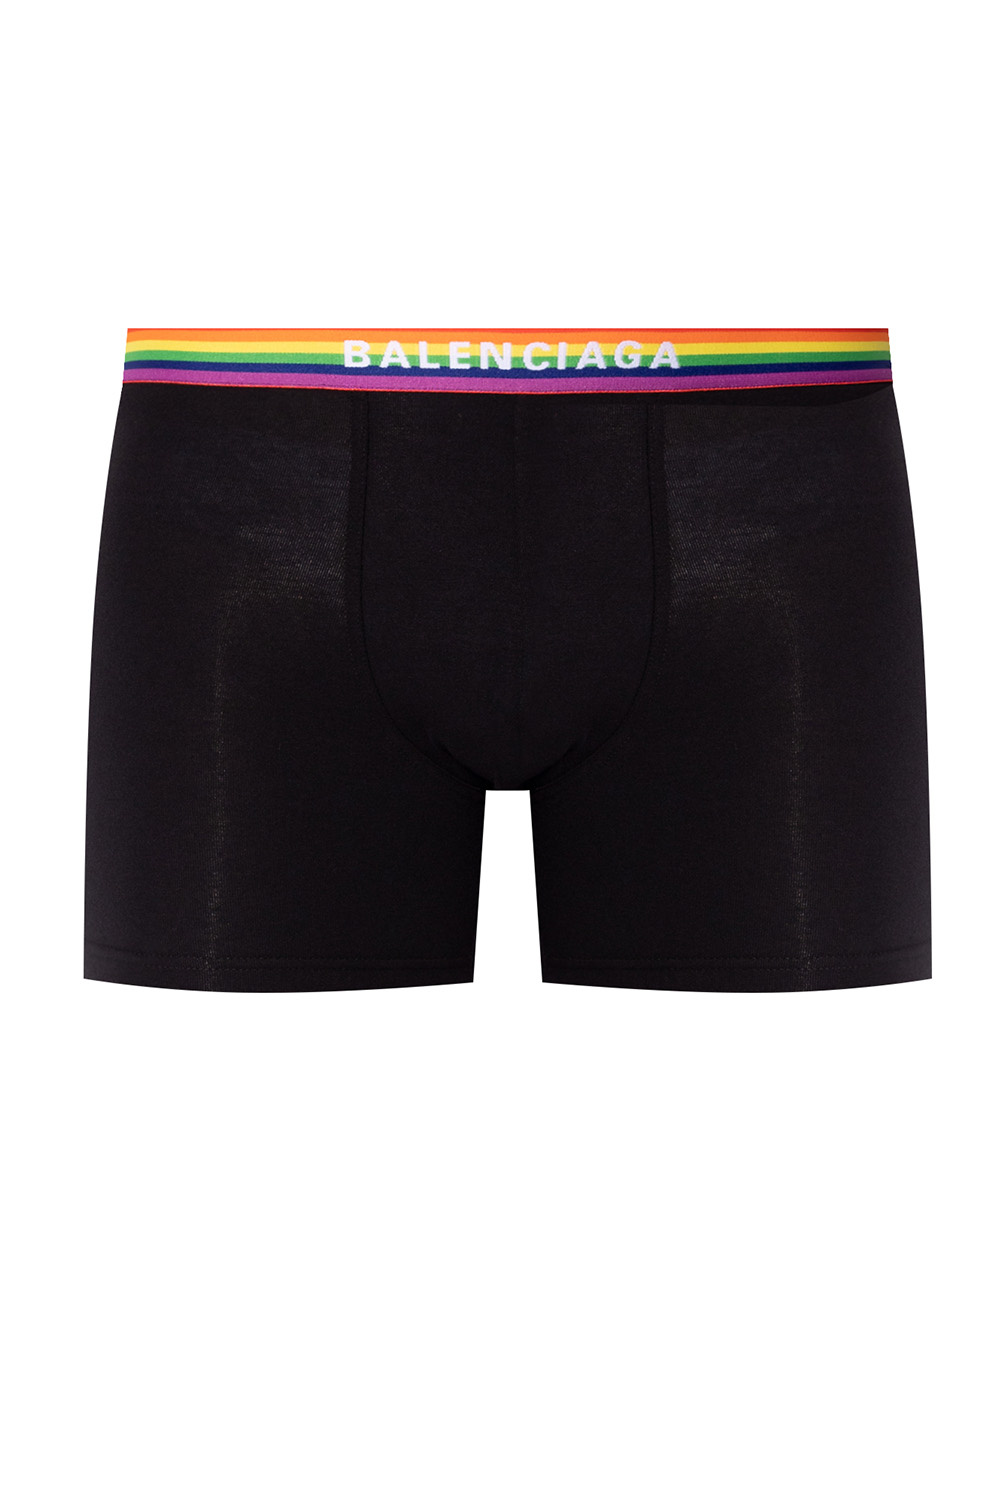 Balenciaga Briefs with logo, Women's Clothing, IetpShops